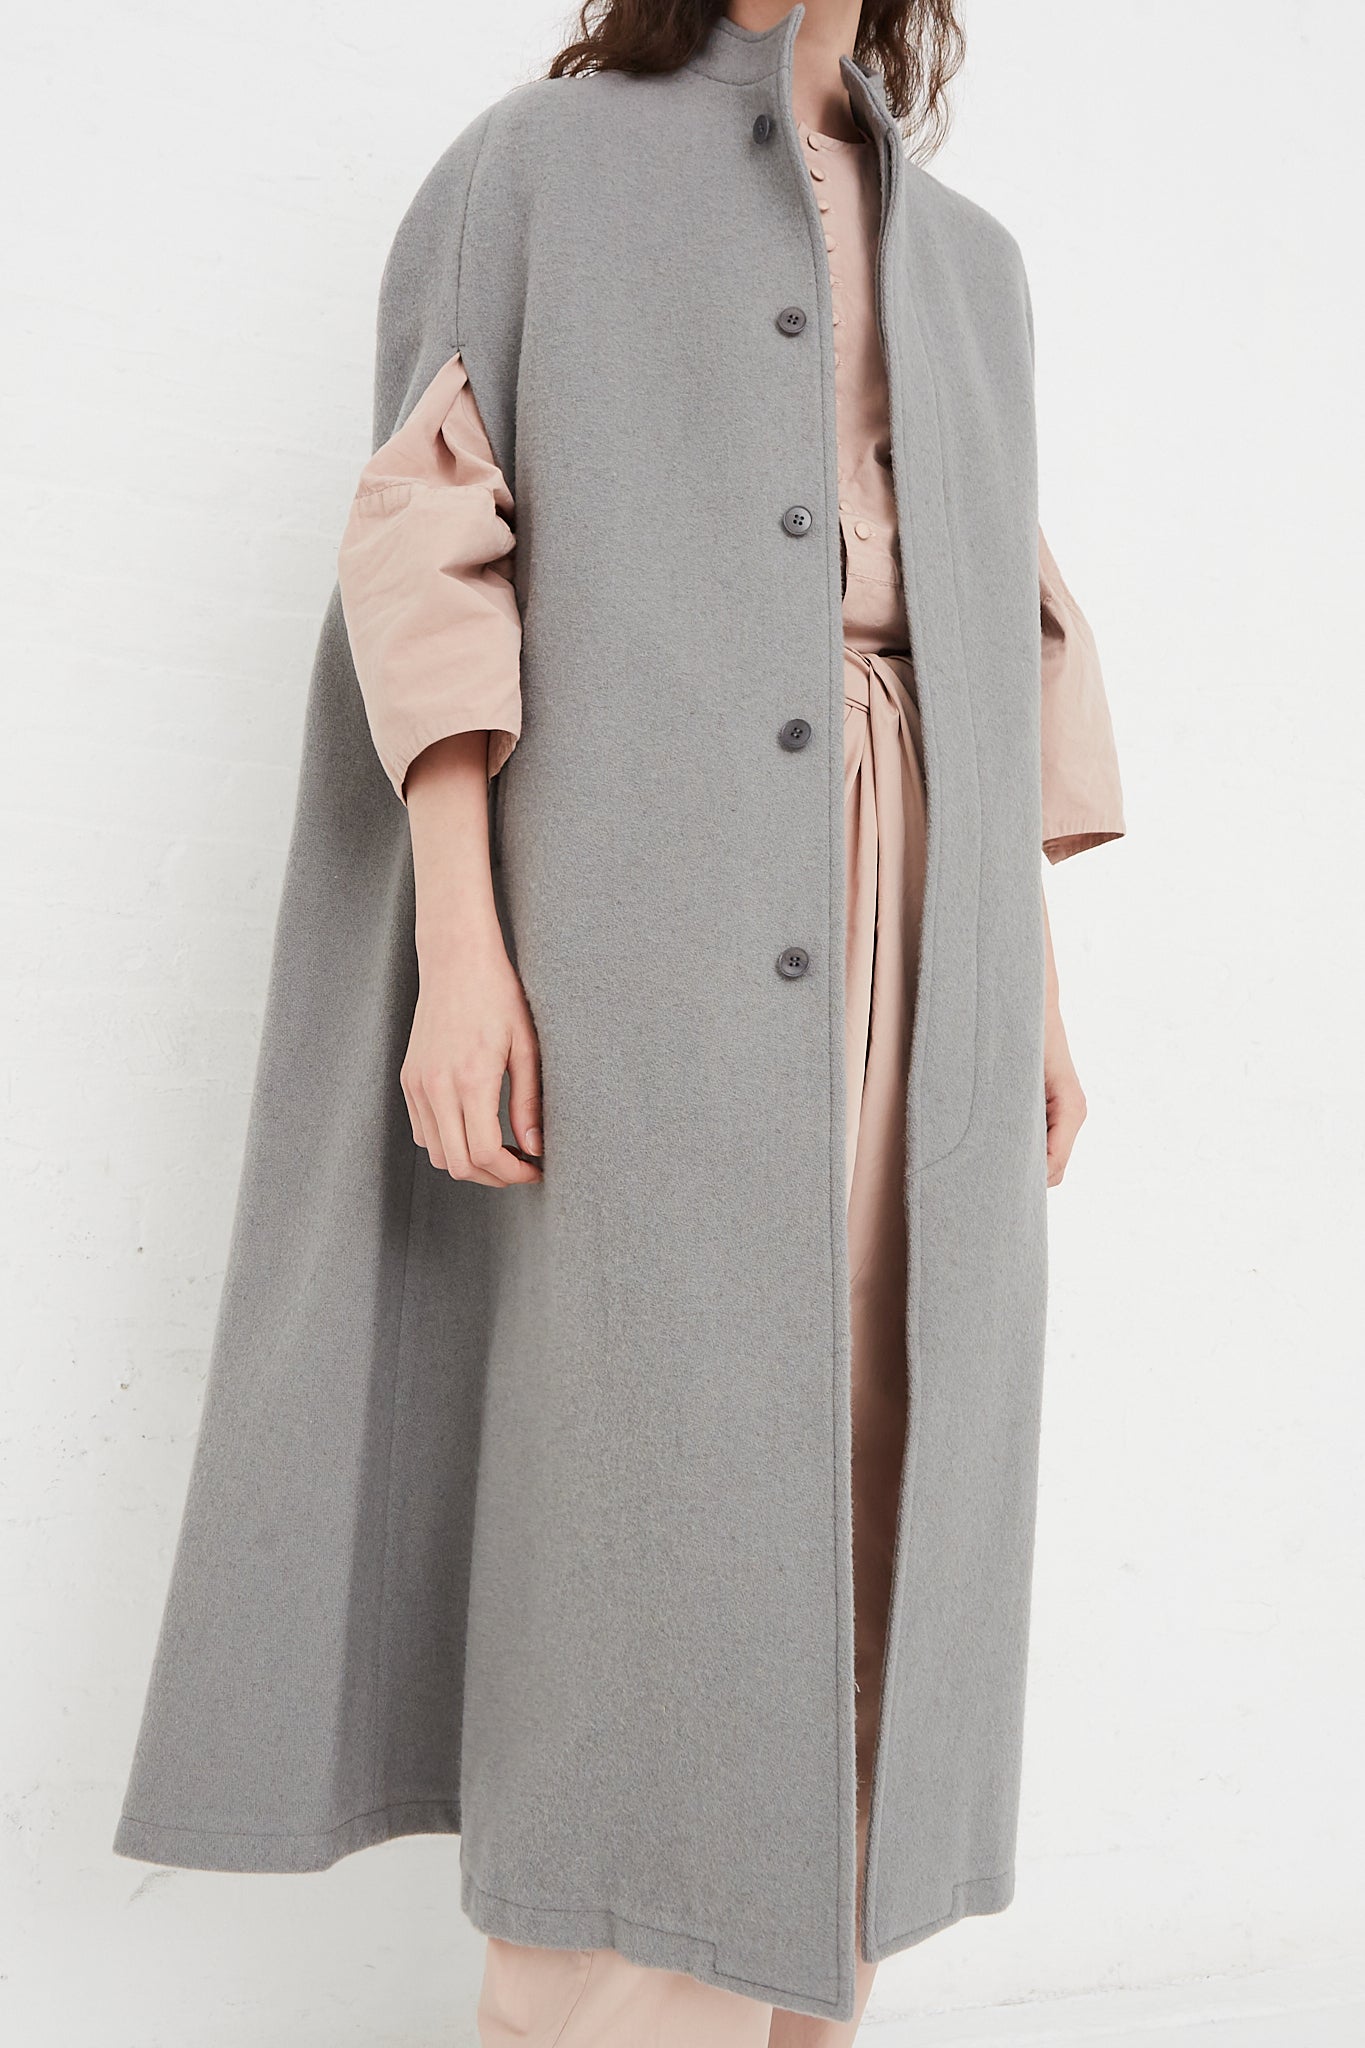 The model is wearing a Cosmic Wonder Japanese Suffolk Melton Cloak in Grey made of wool.